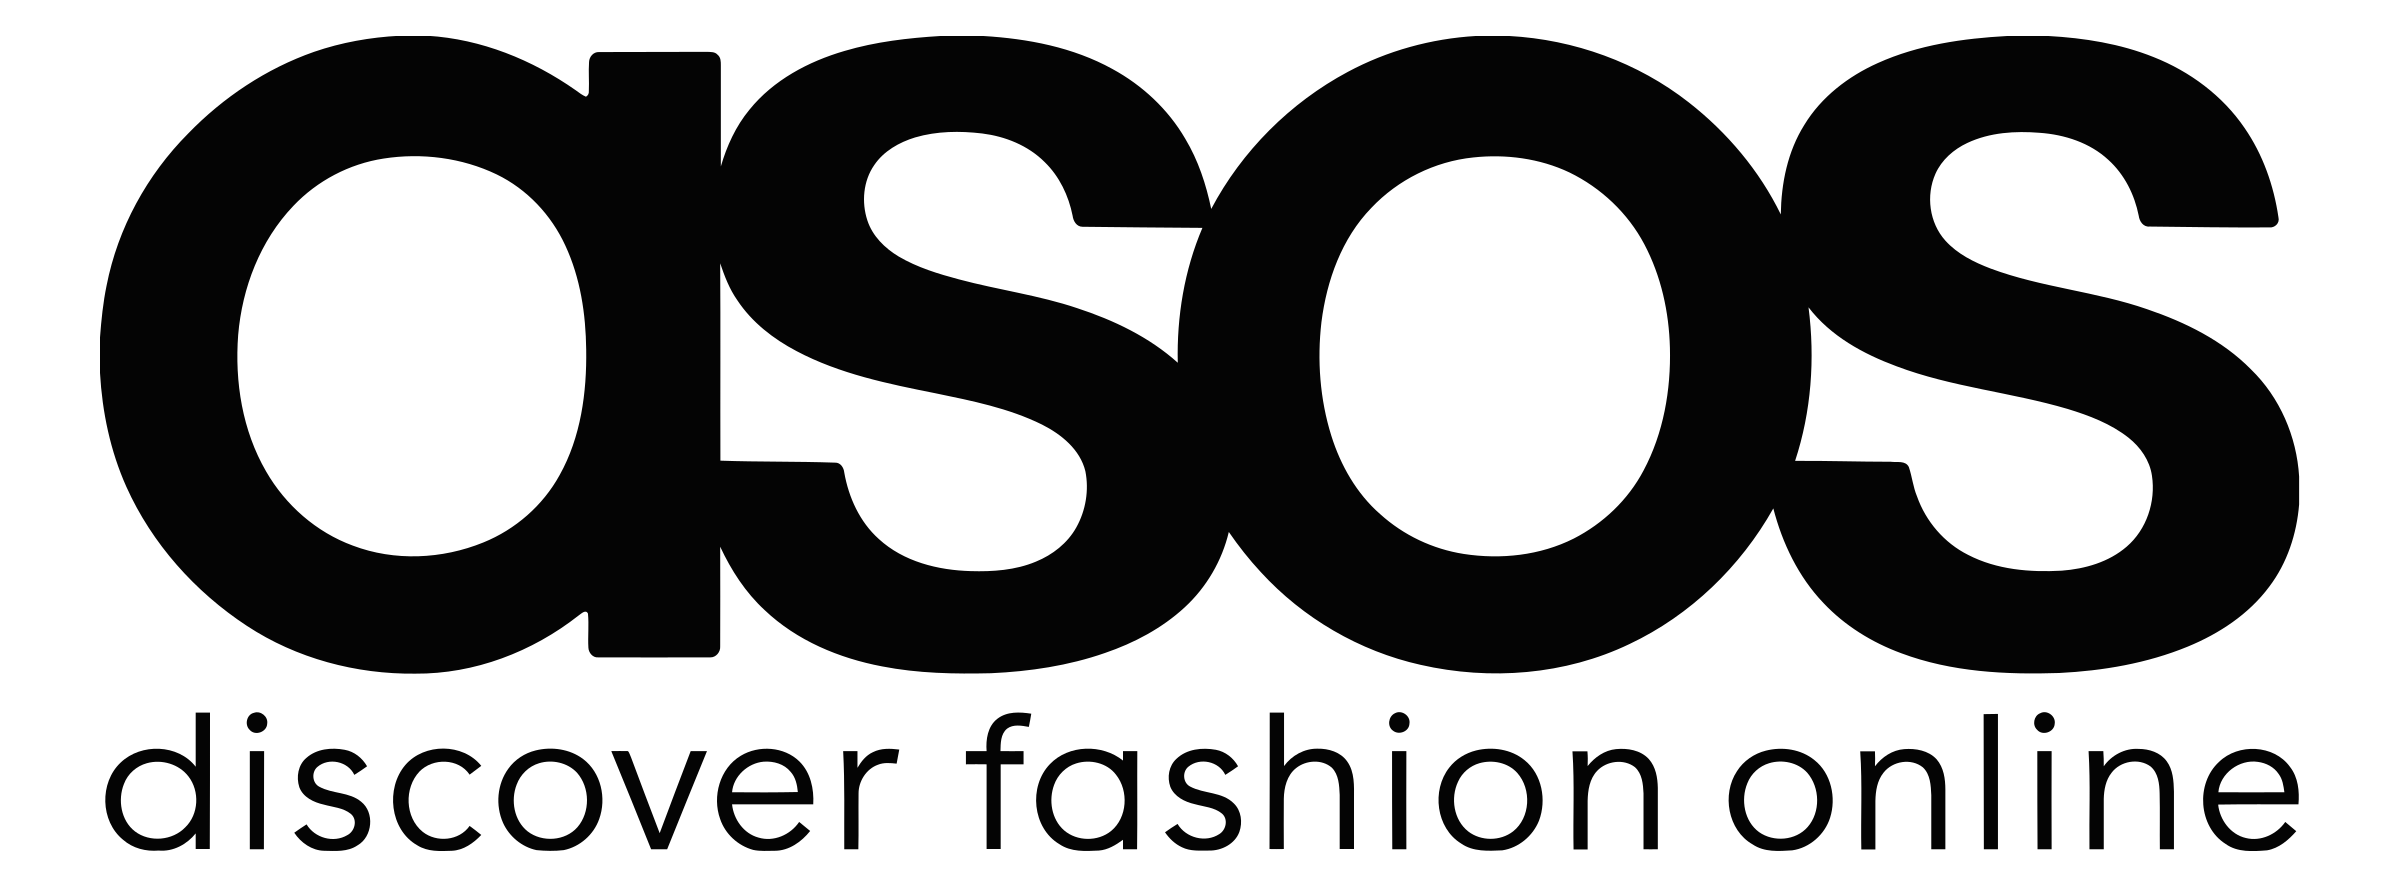 ASOS Logo PNG Transparent & SVG Vector.